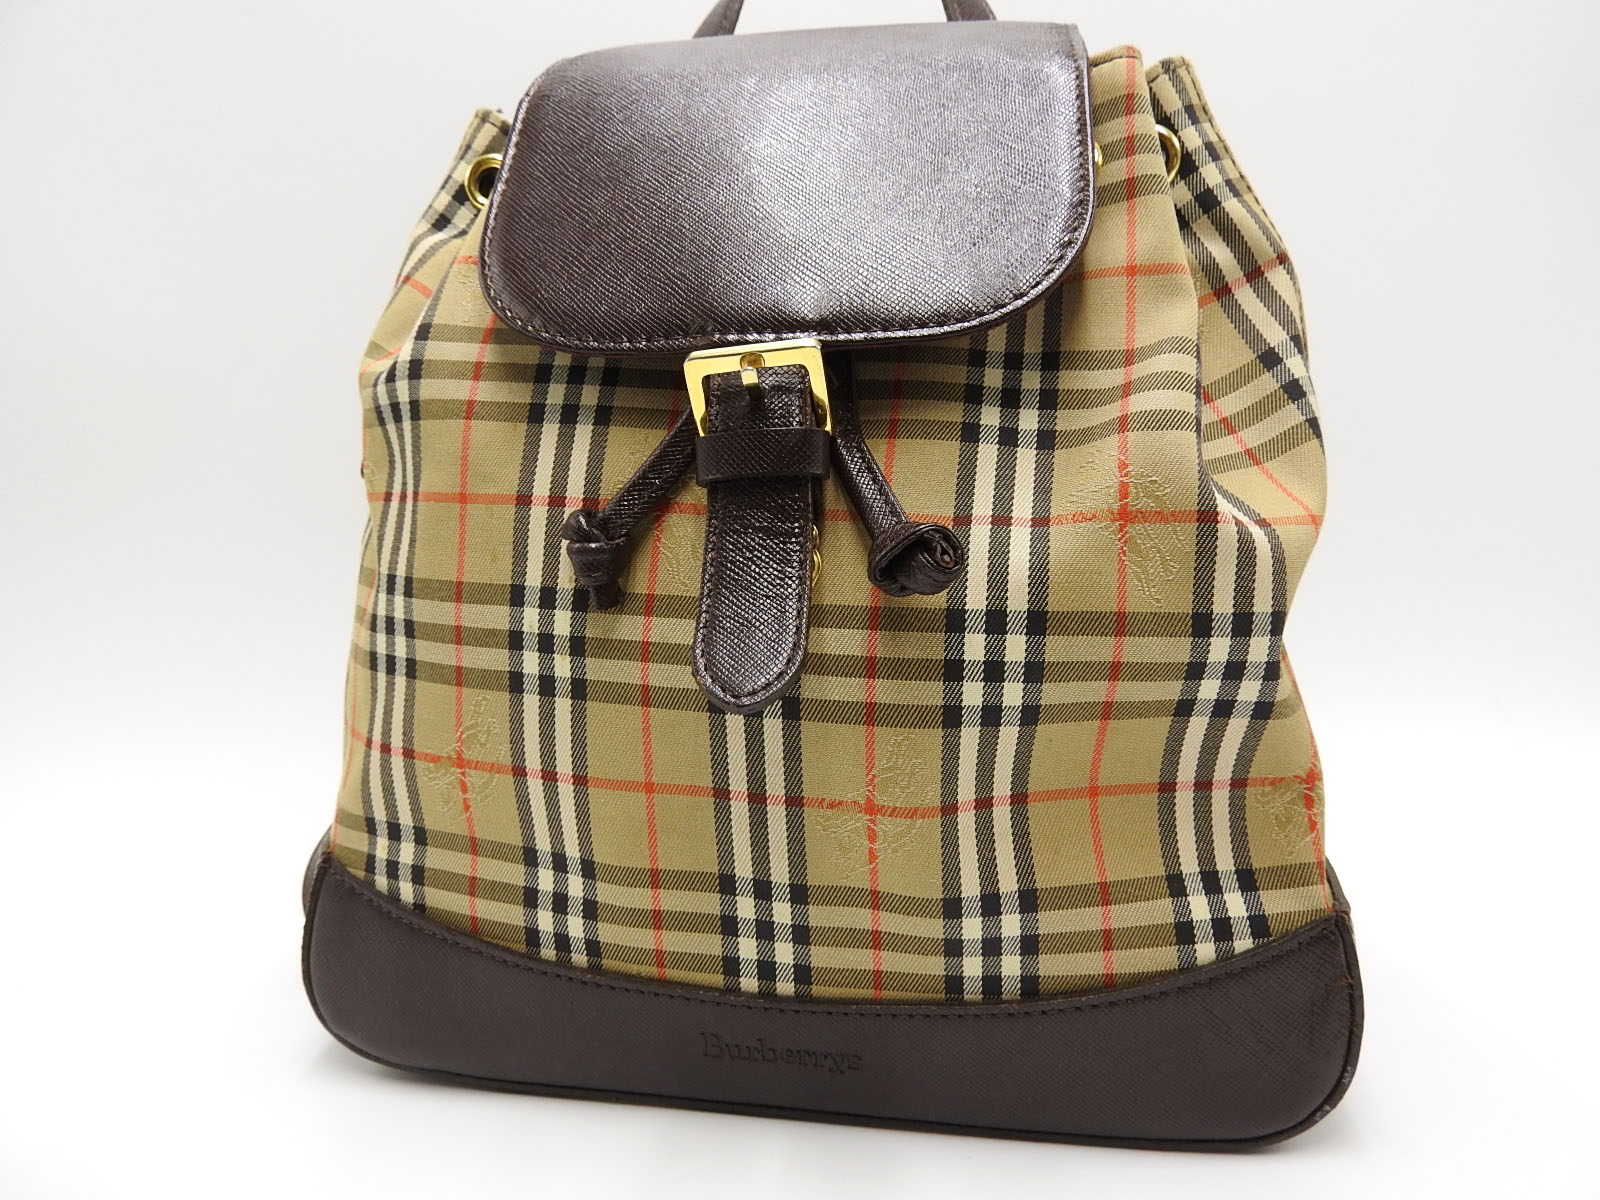 burberry nova check backpack